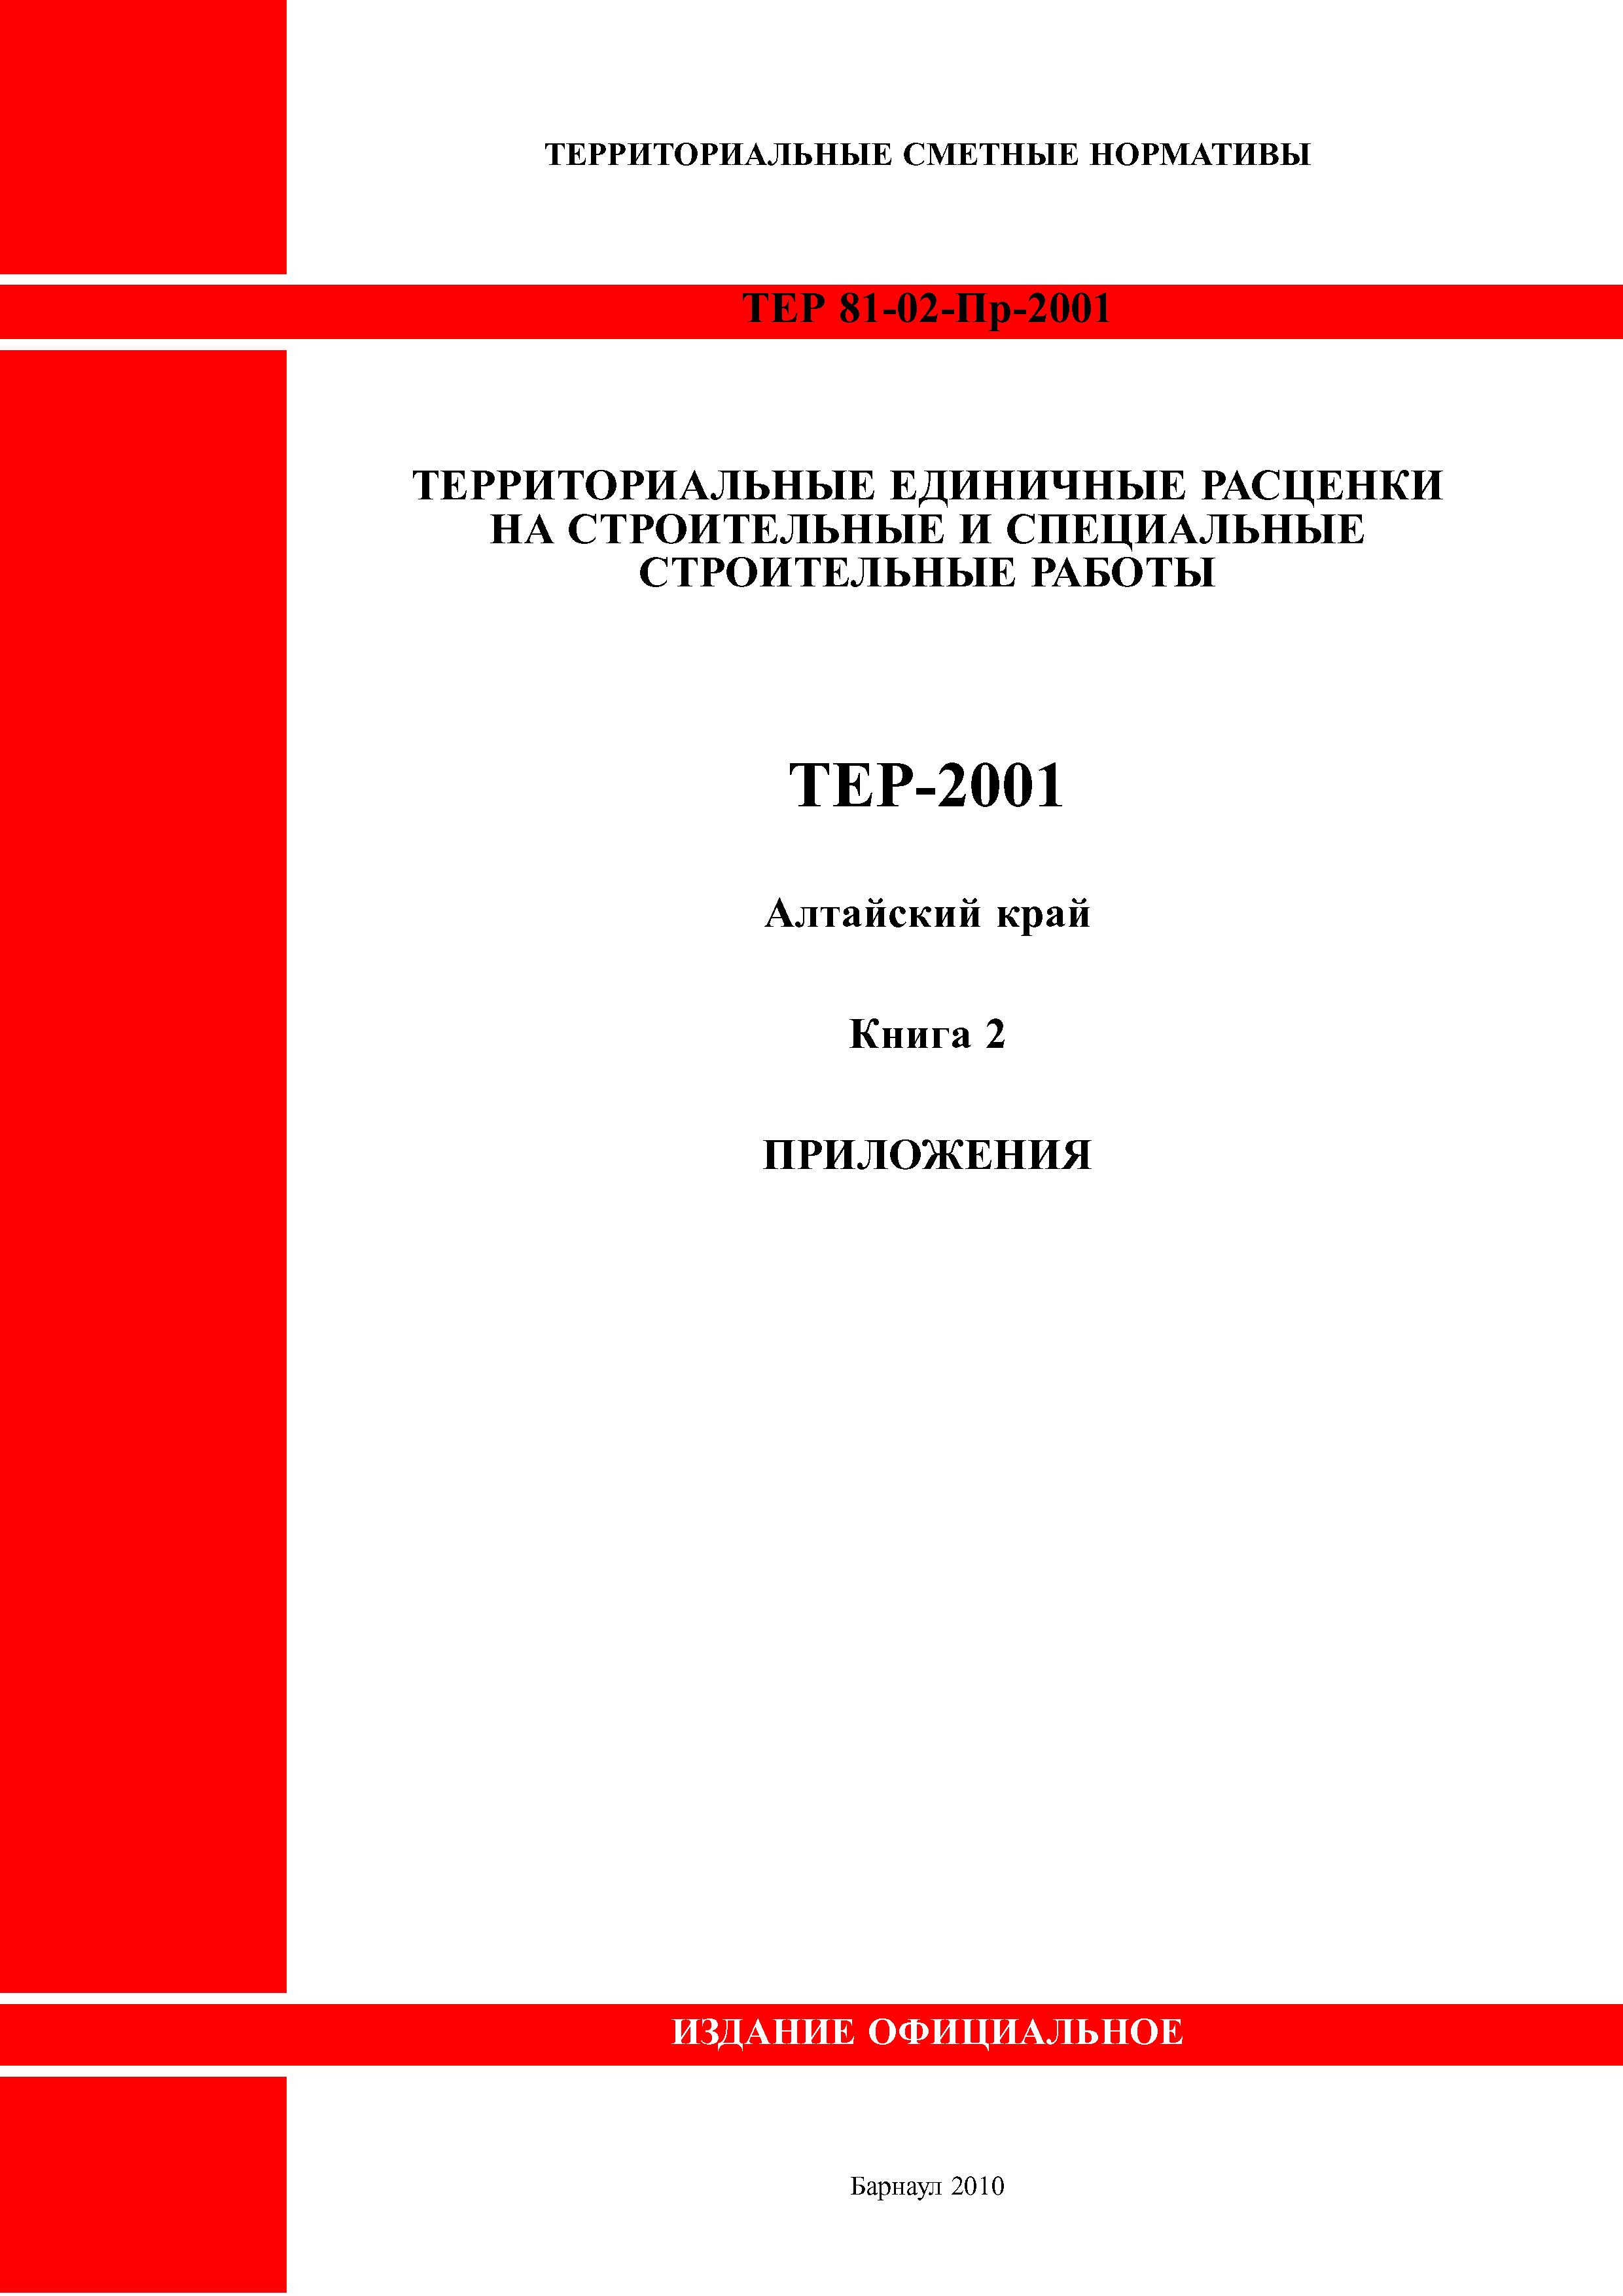 ТЕР Алтайский край 2001-Пр